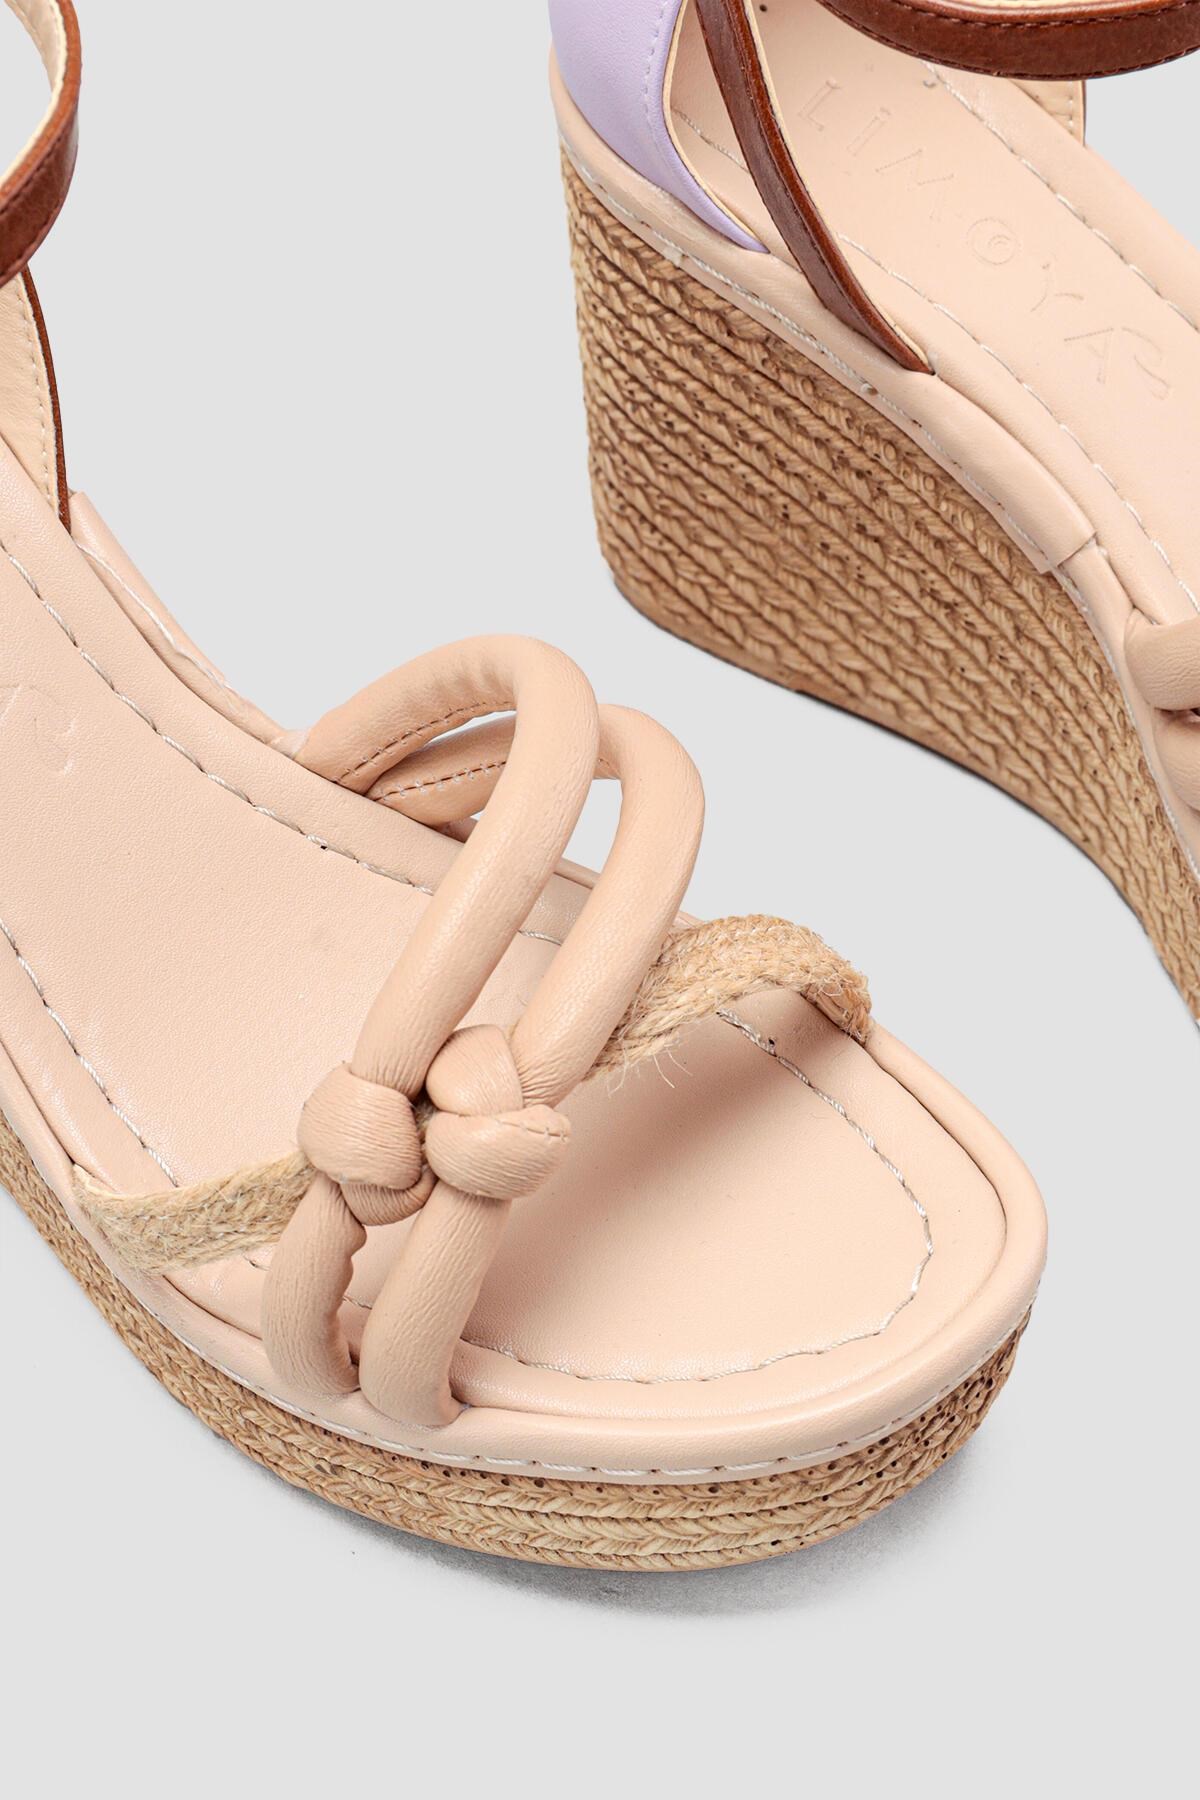 Olena Nud Hasir Detayli Yüksek Dolgu Topuklu Sandalet | Limoya.com ile  Modayı Keşfet!